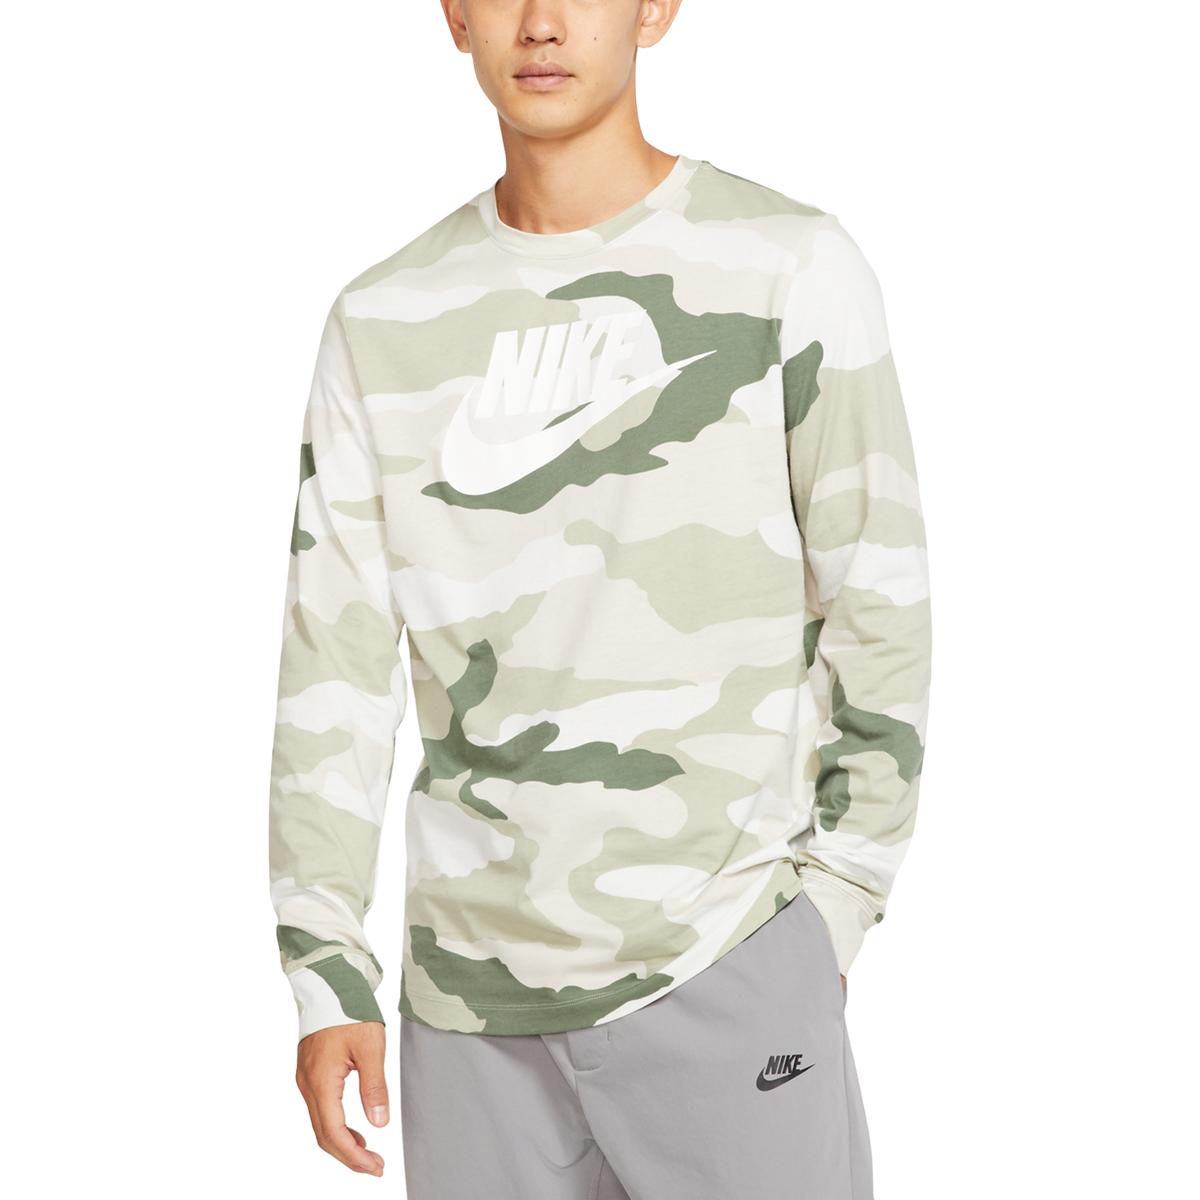 Nike Mens Green Camouflage Logo Top Shirts & Tops XXL BHFO 0274 | eBay